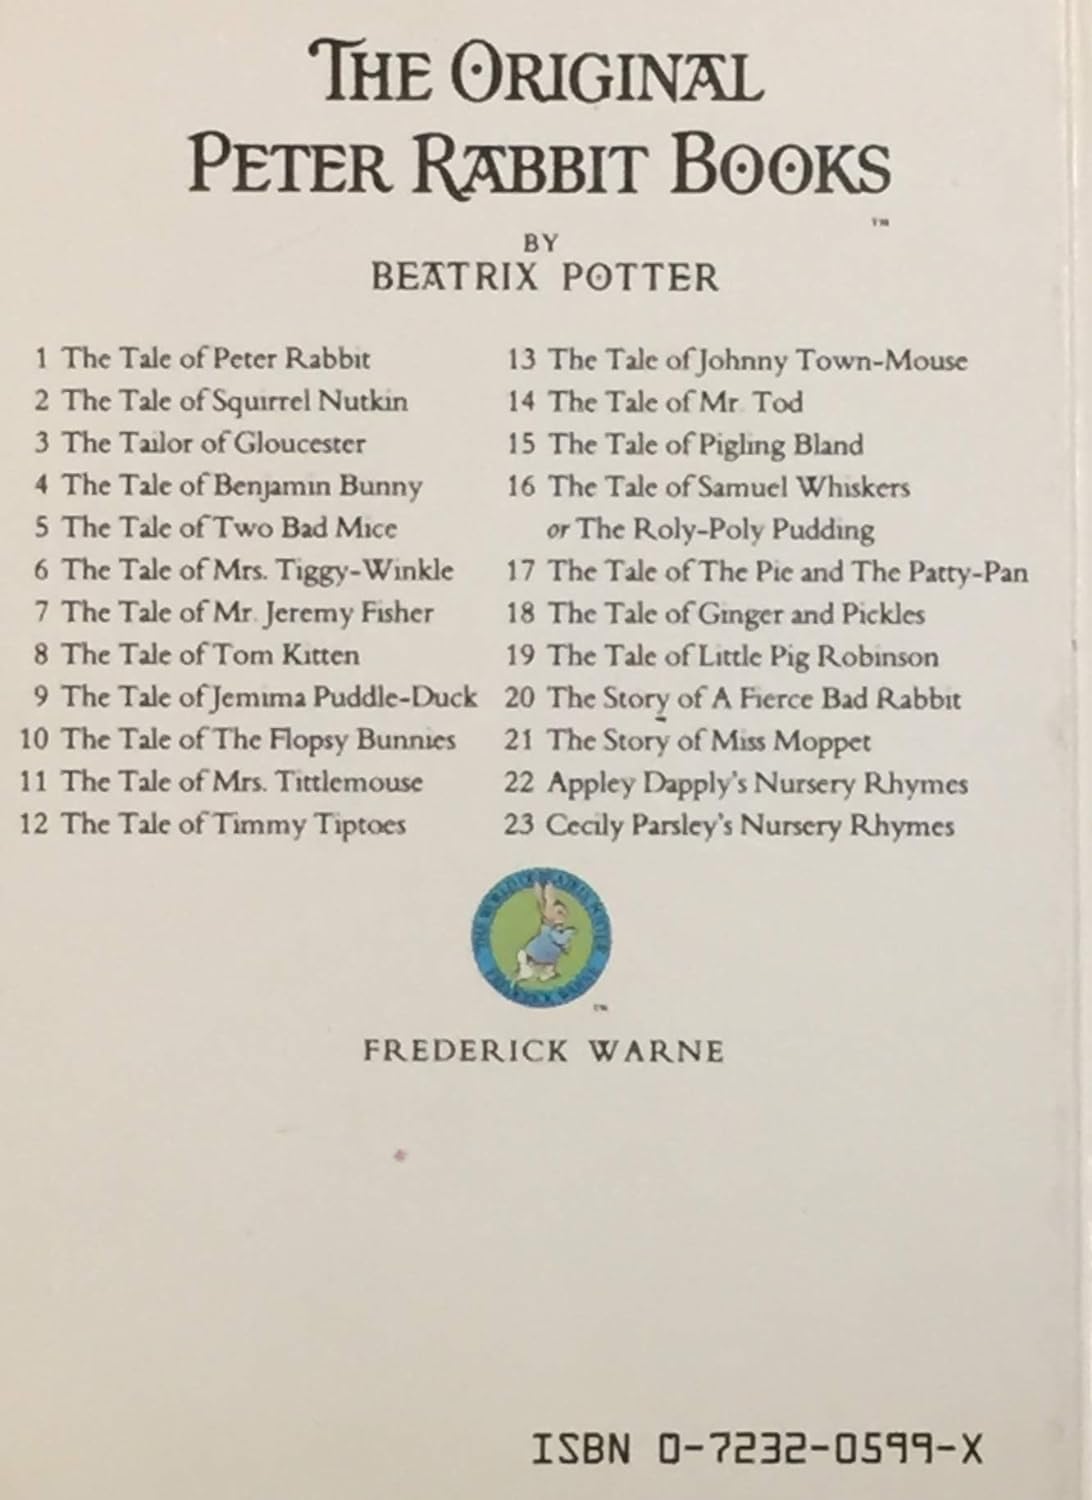 The Original Peter Rabbit Books # 8 : The Tale of Tom Kitten (Beatrix Potter)